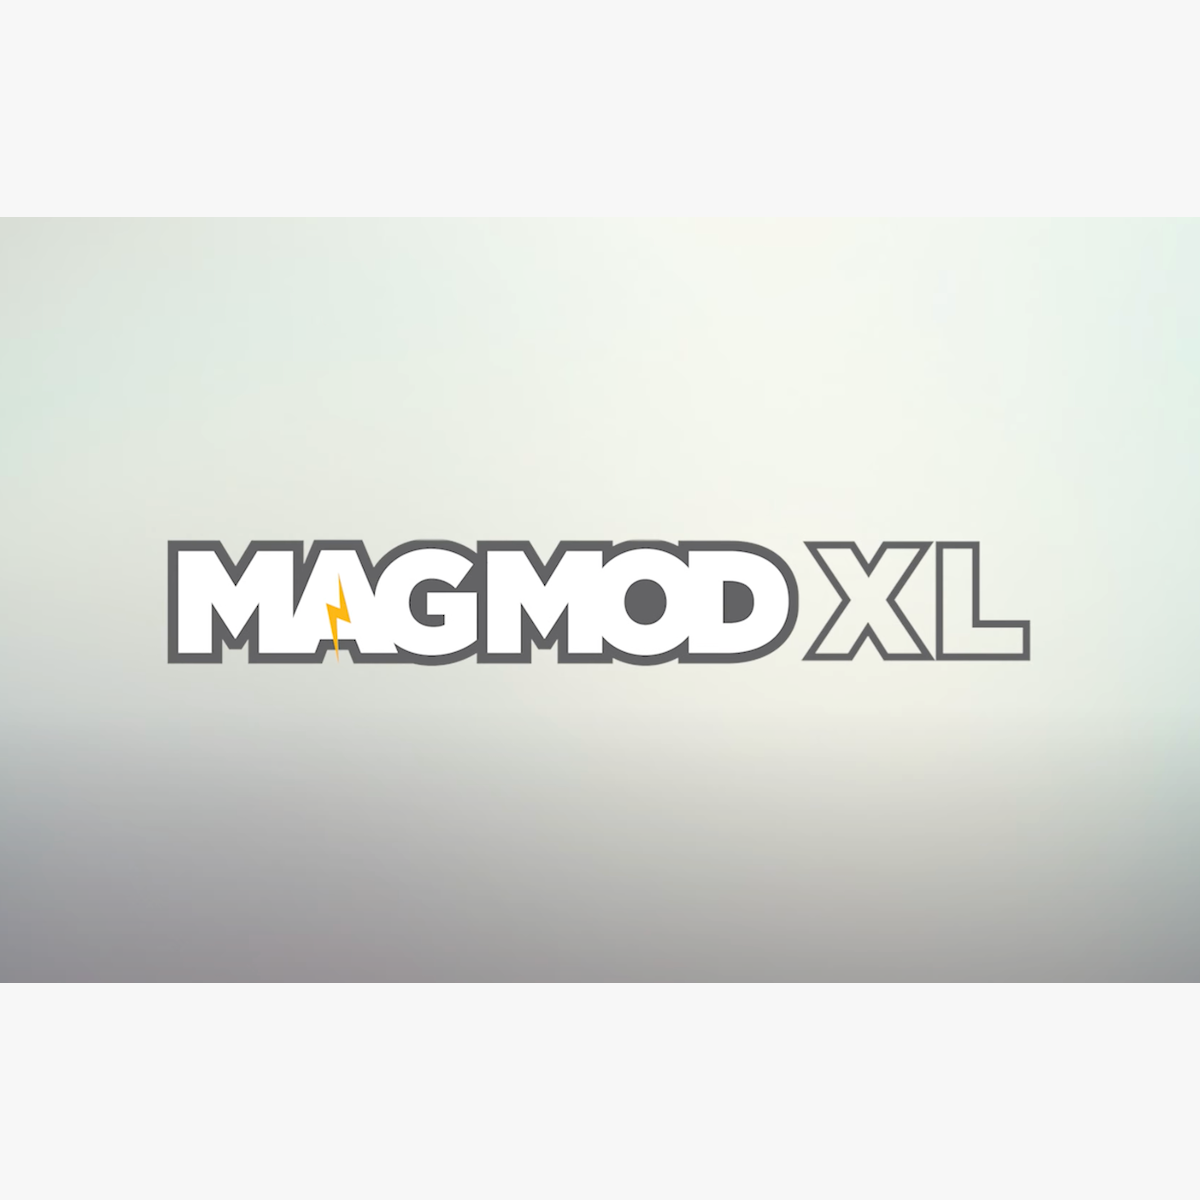 MagMod XL Dome Gel Diffusion